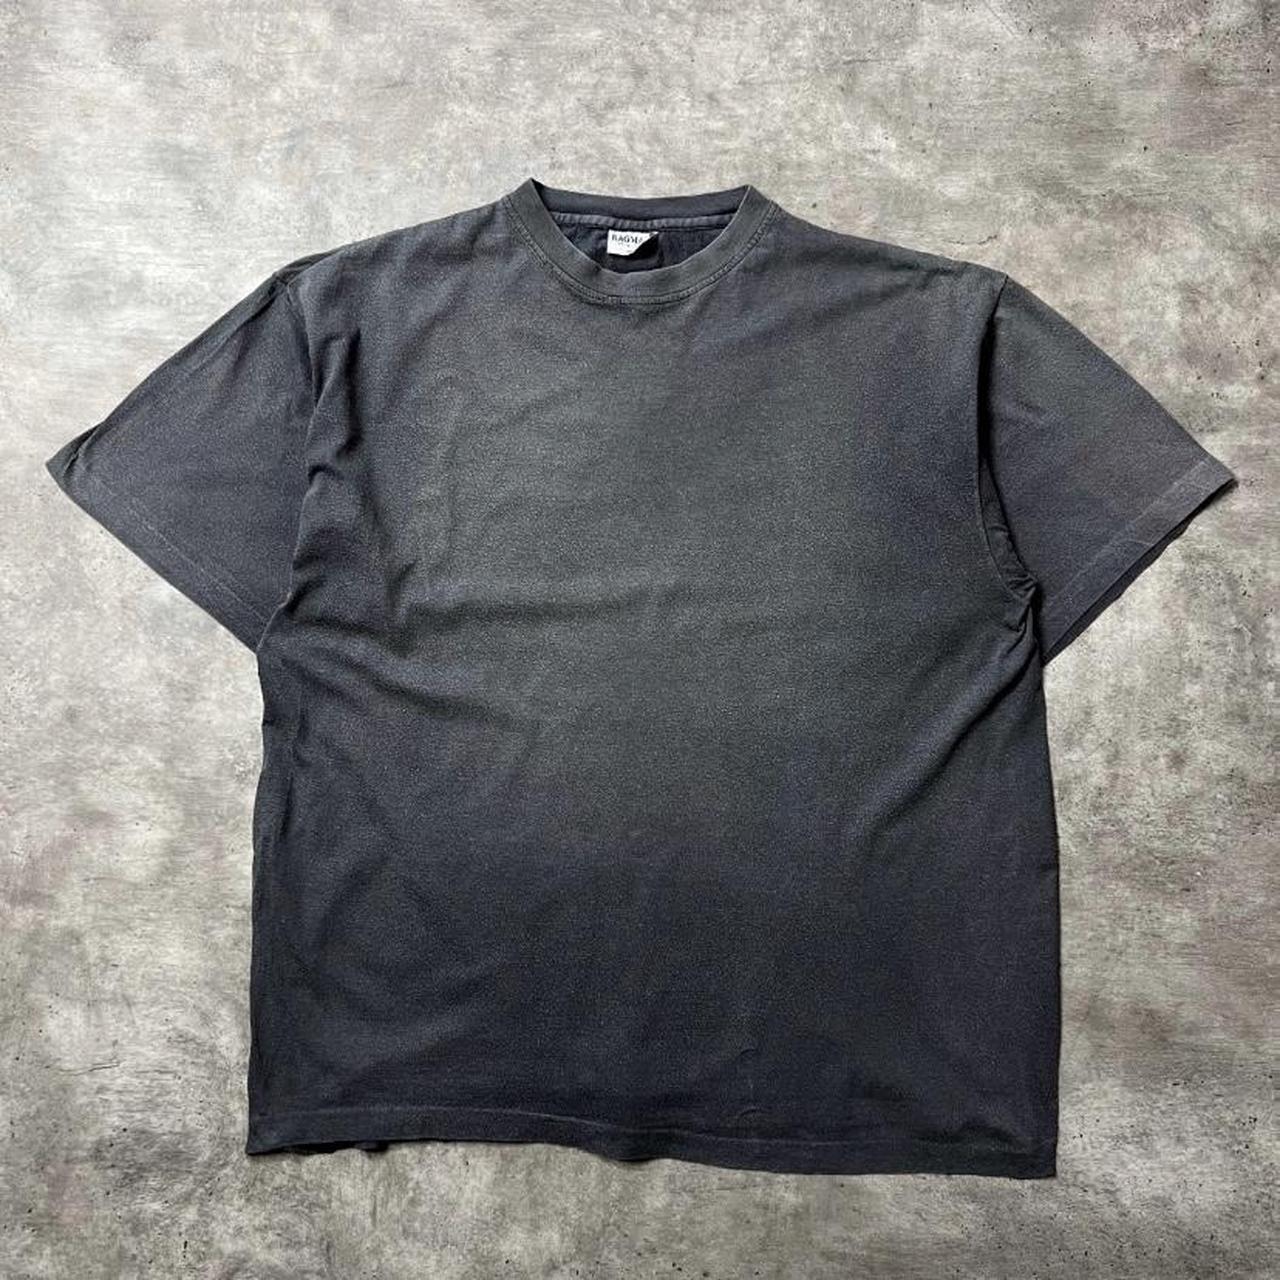 Men's Black and Grey T-shirt | Depop